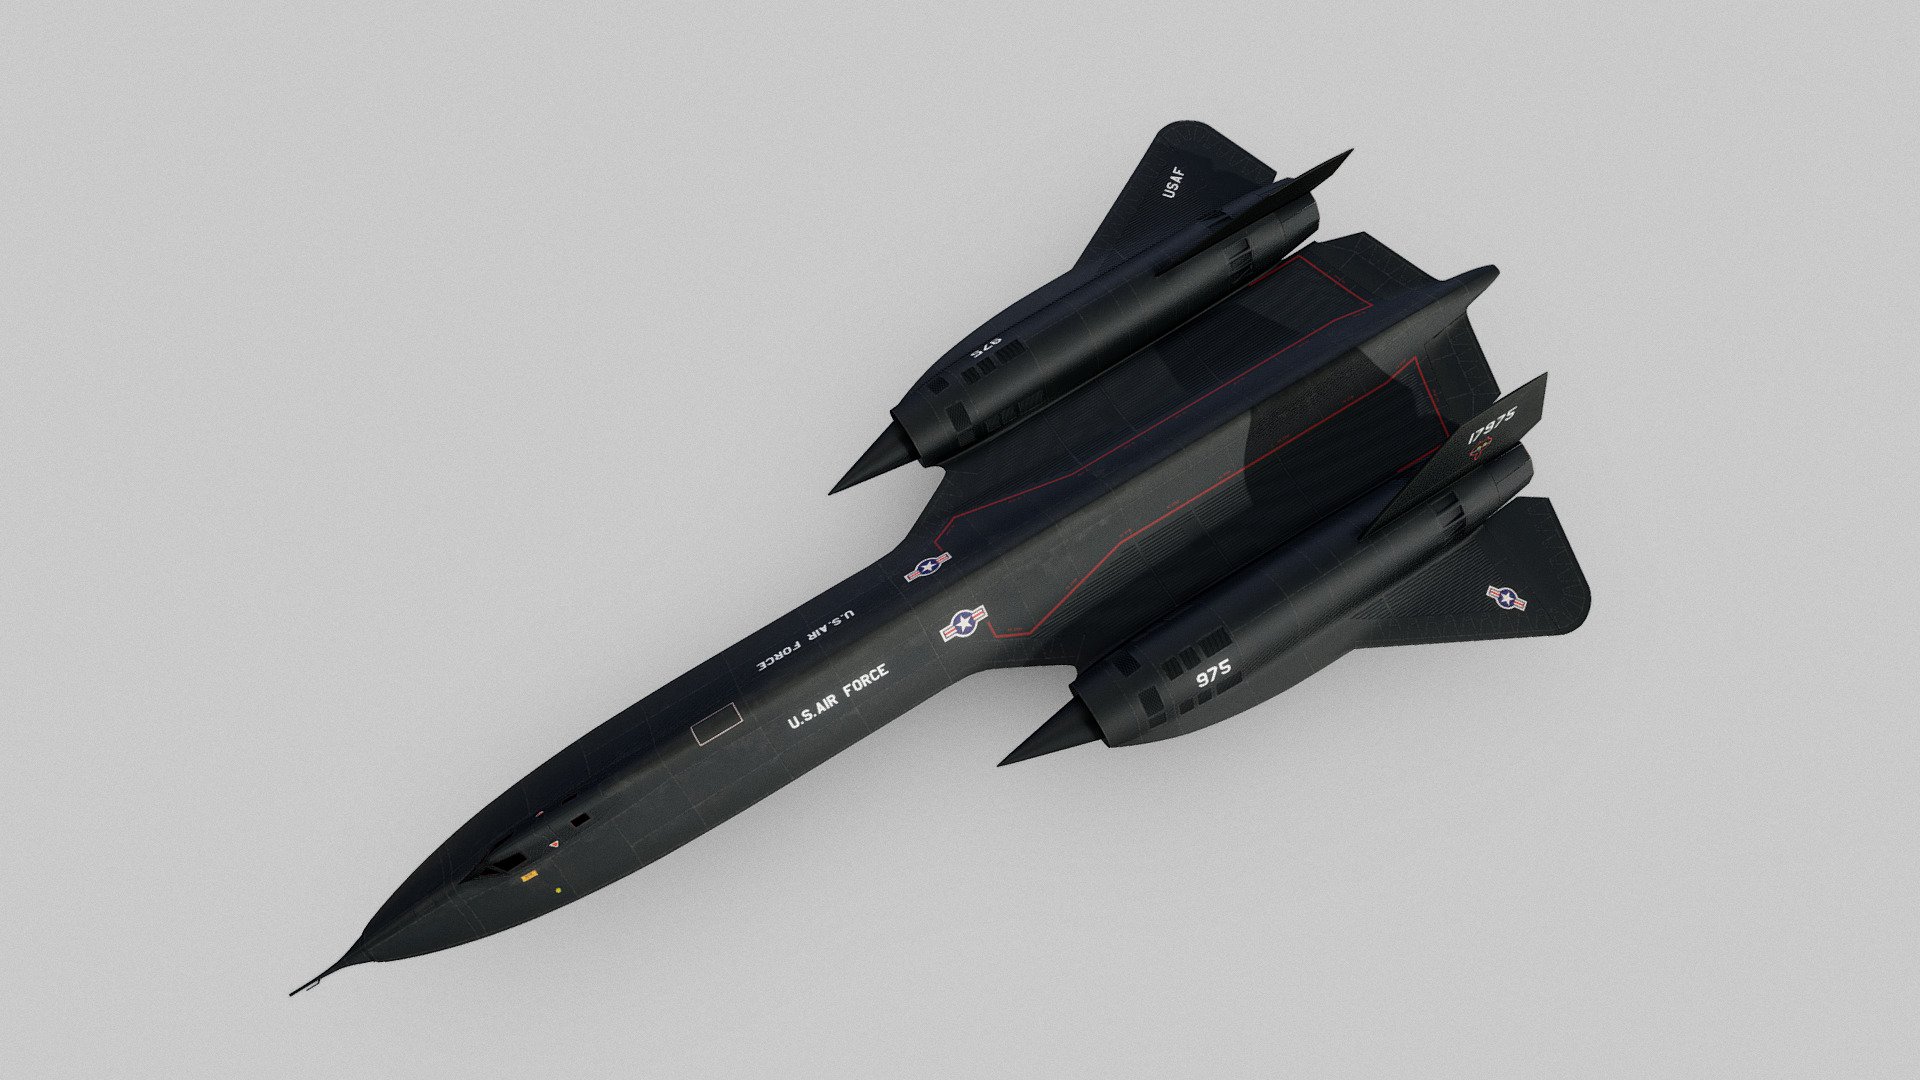 The Lockheed SR-71 &ldquo;Blackbird